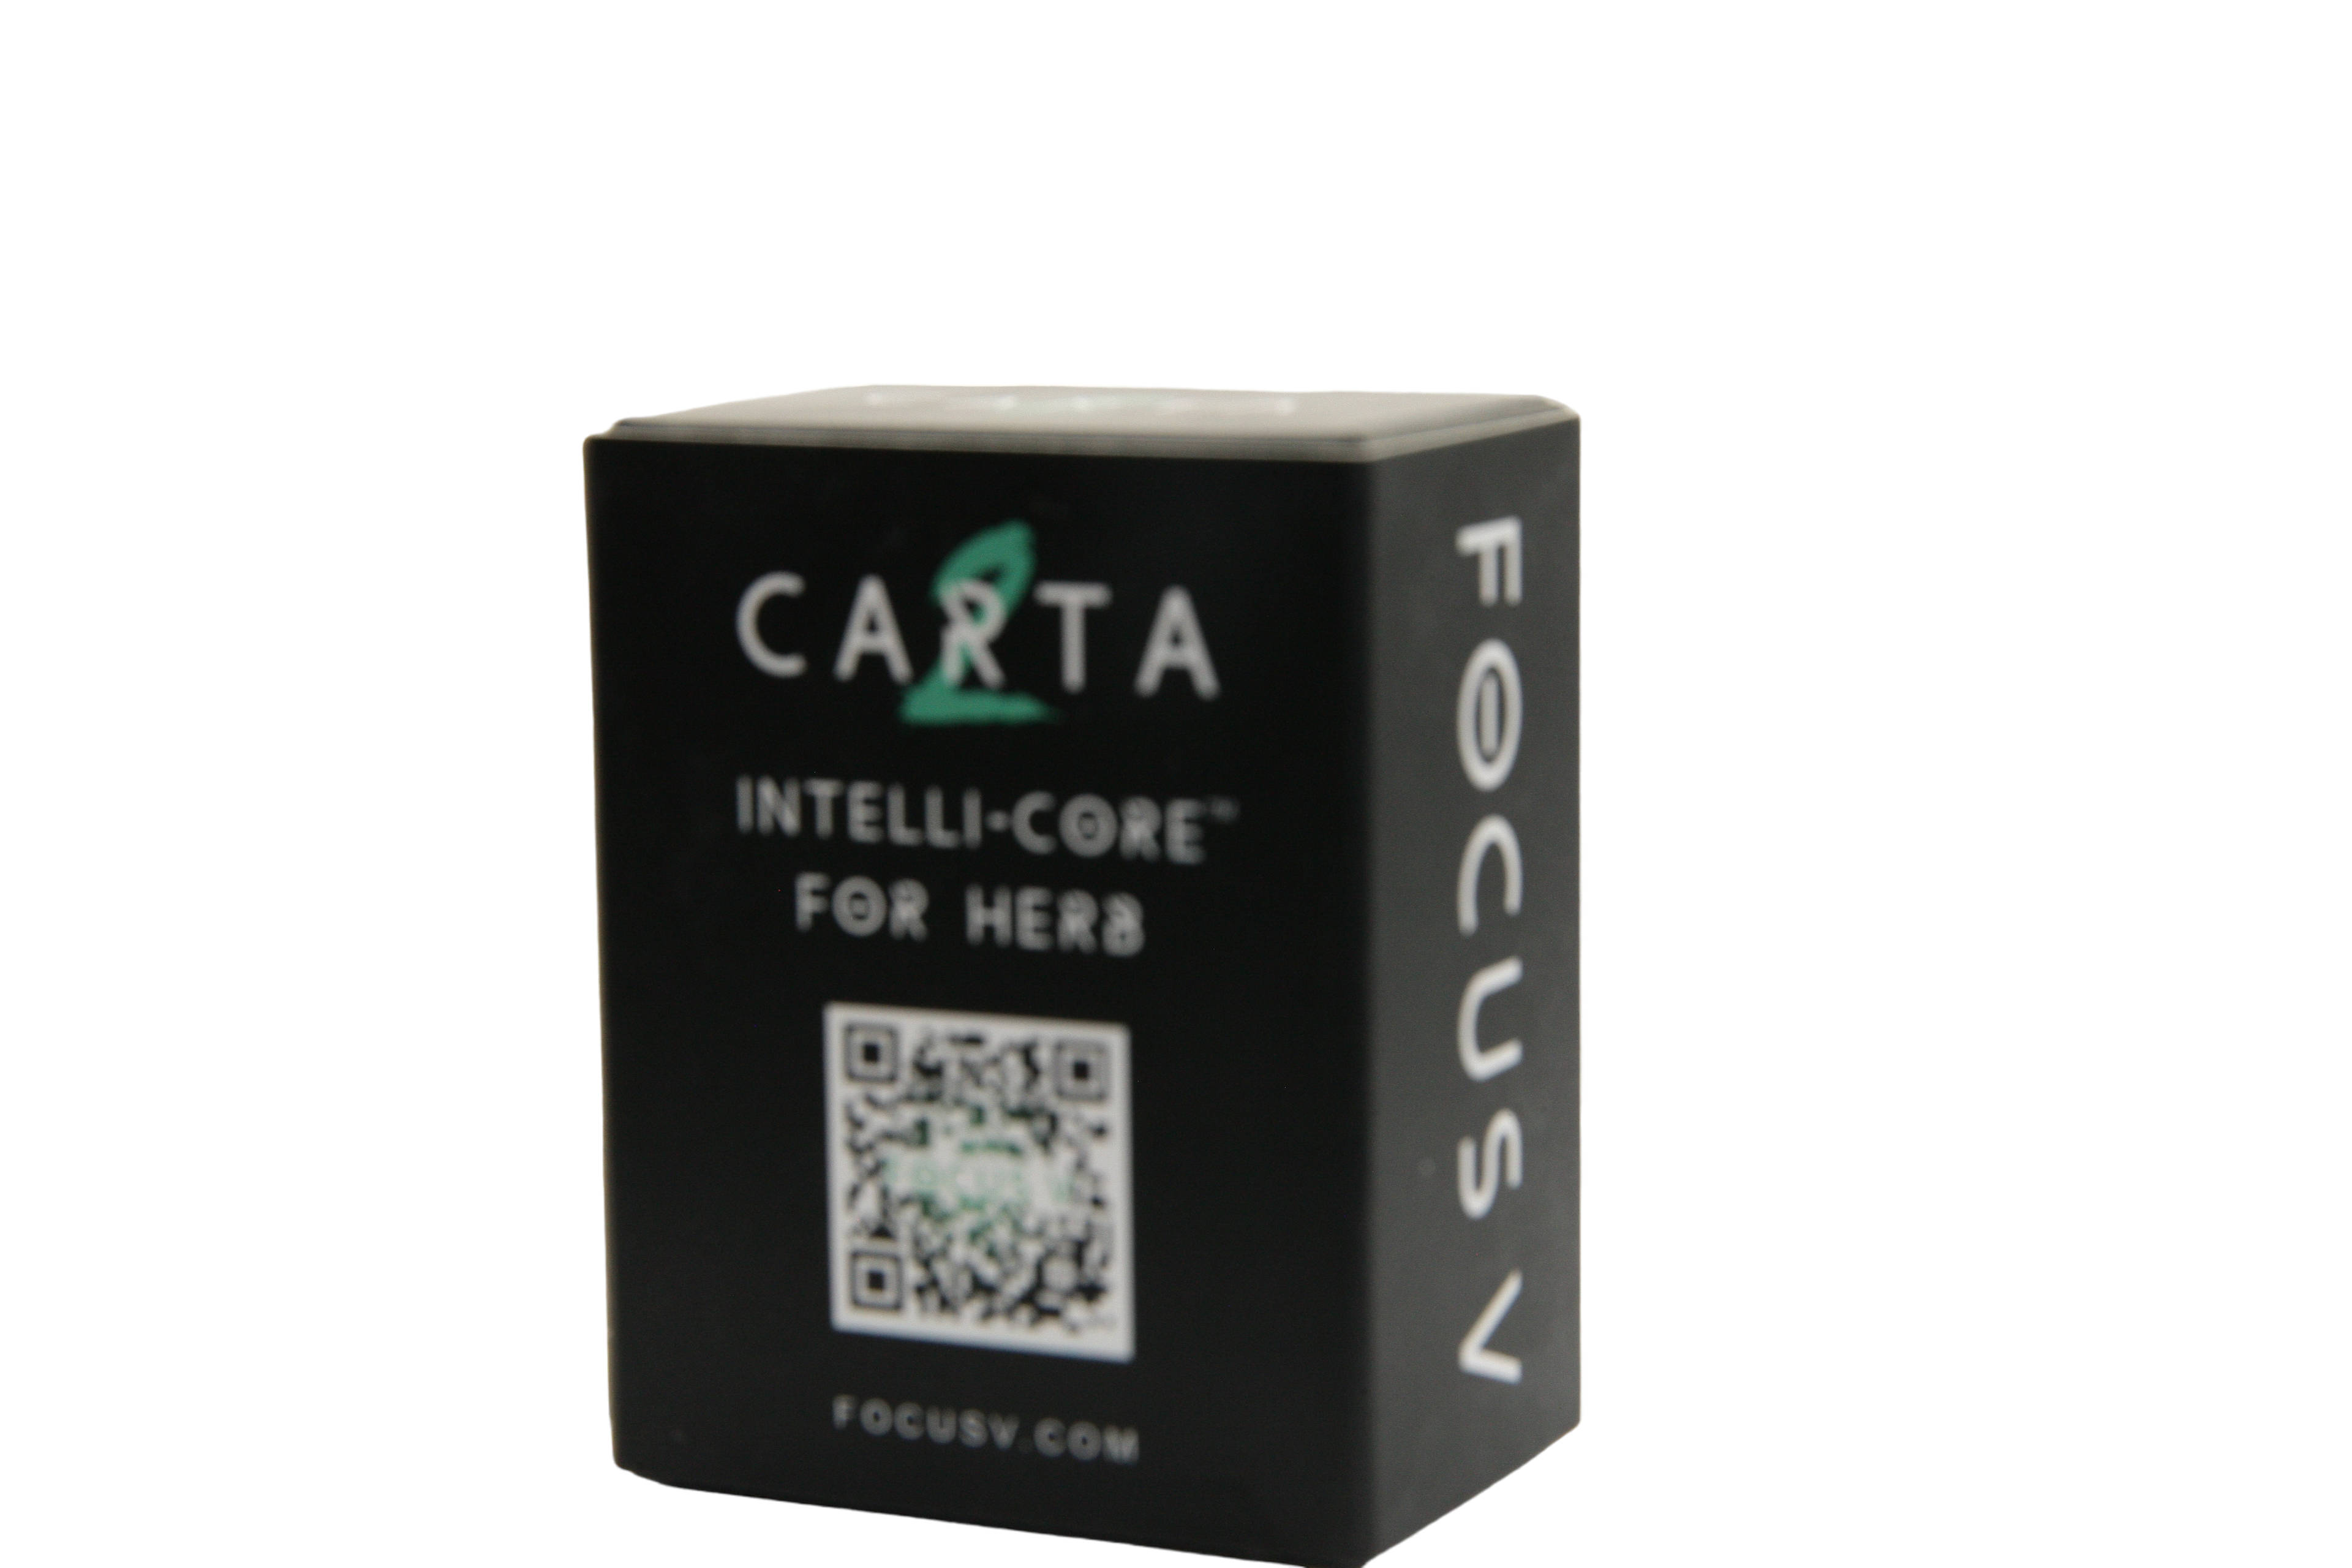 Carta 2 Intelli-Core™ Atomizer For Herb